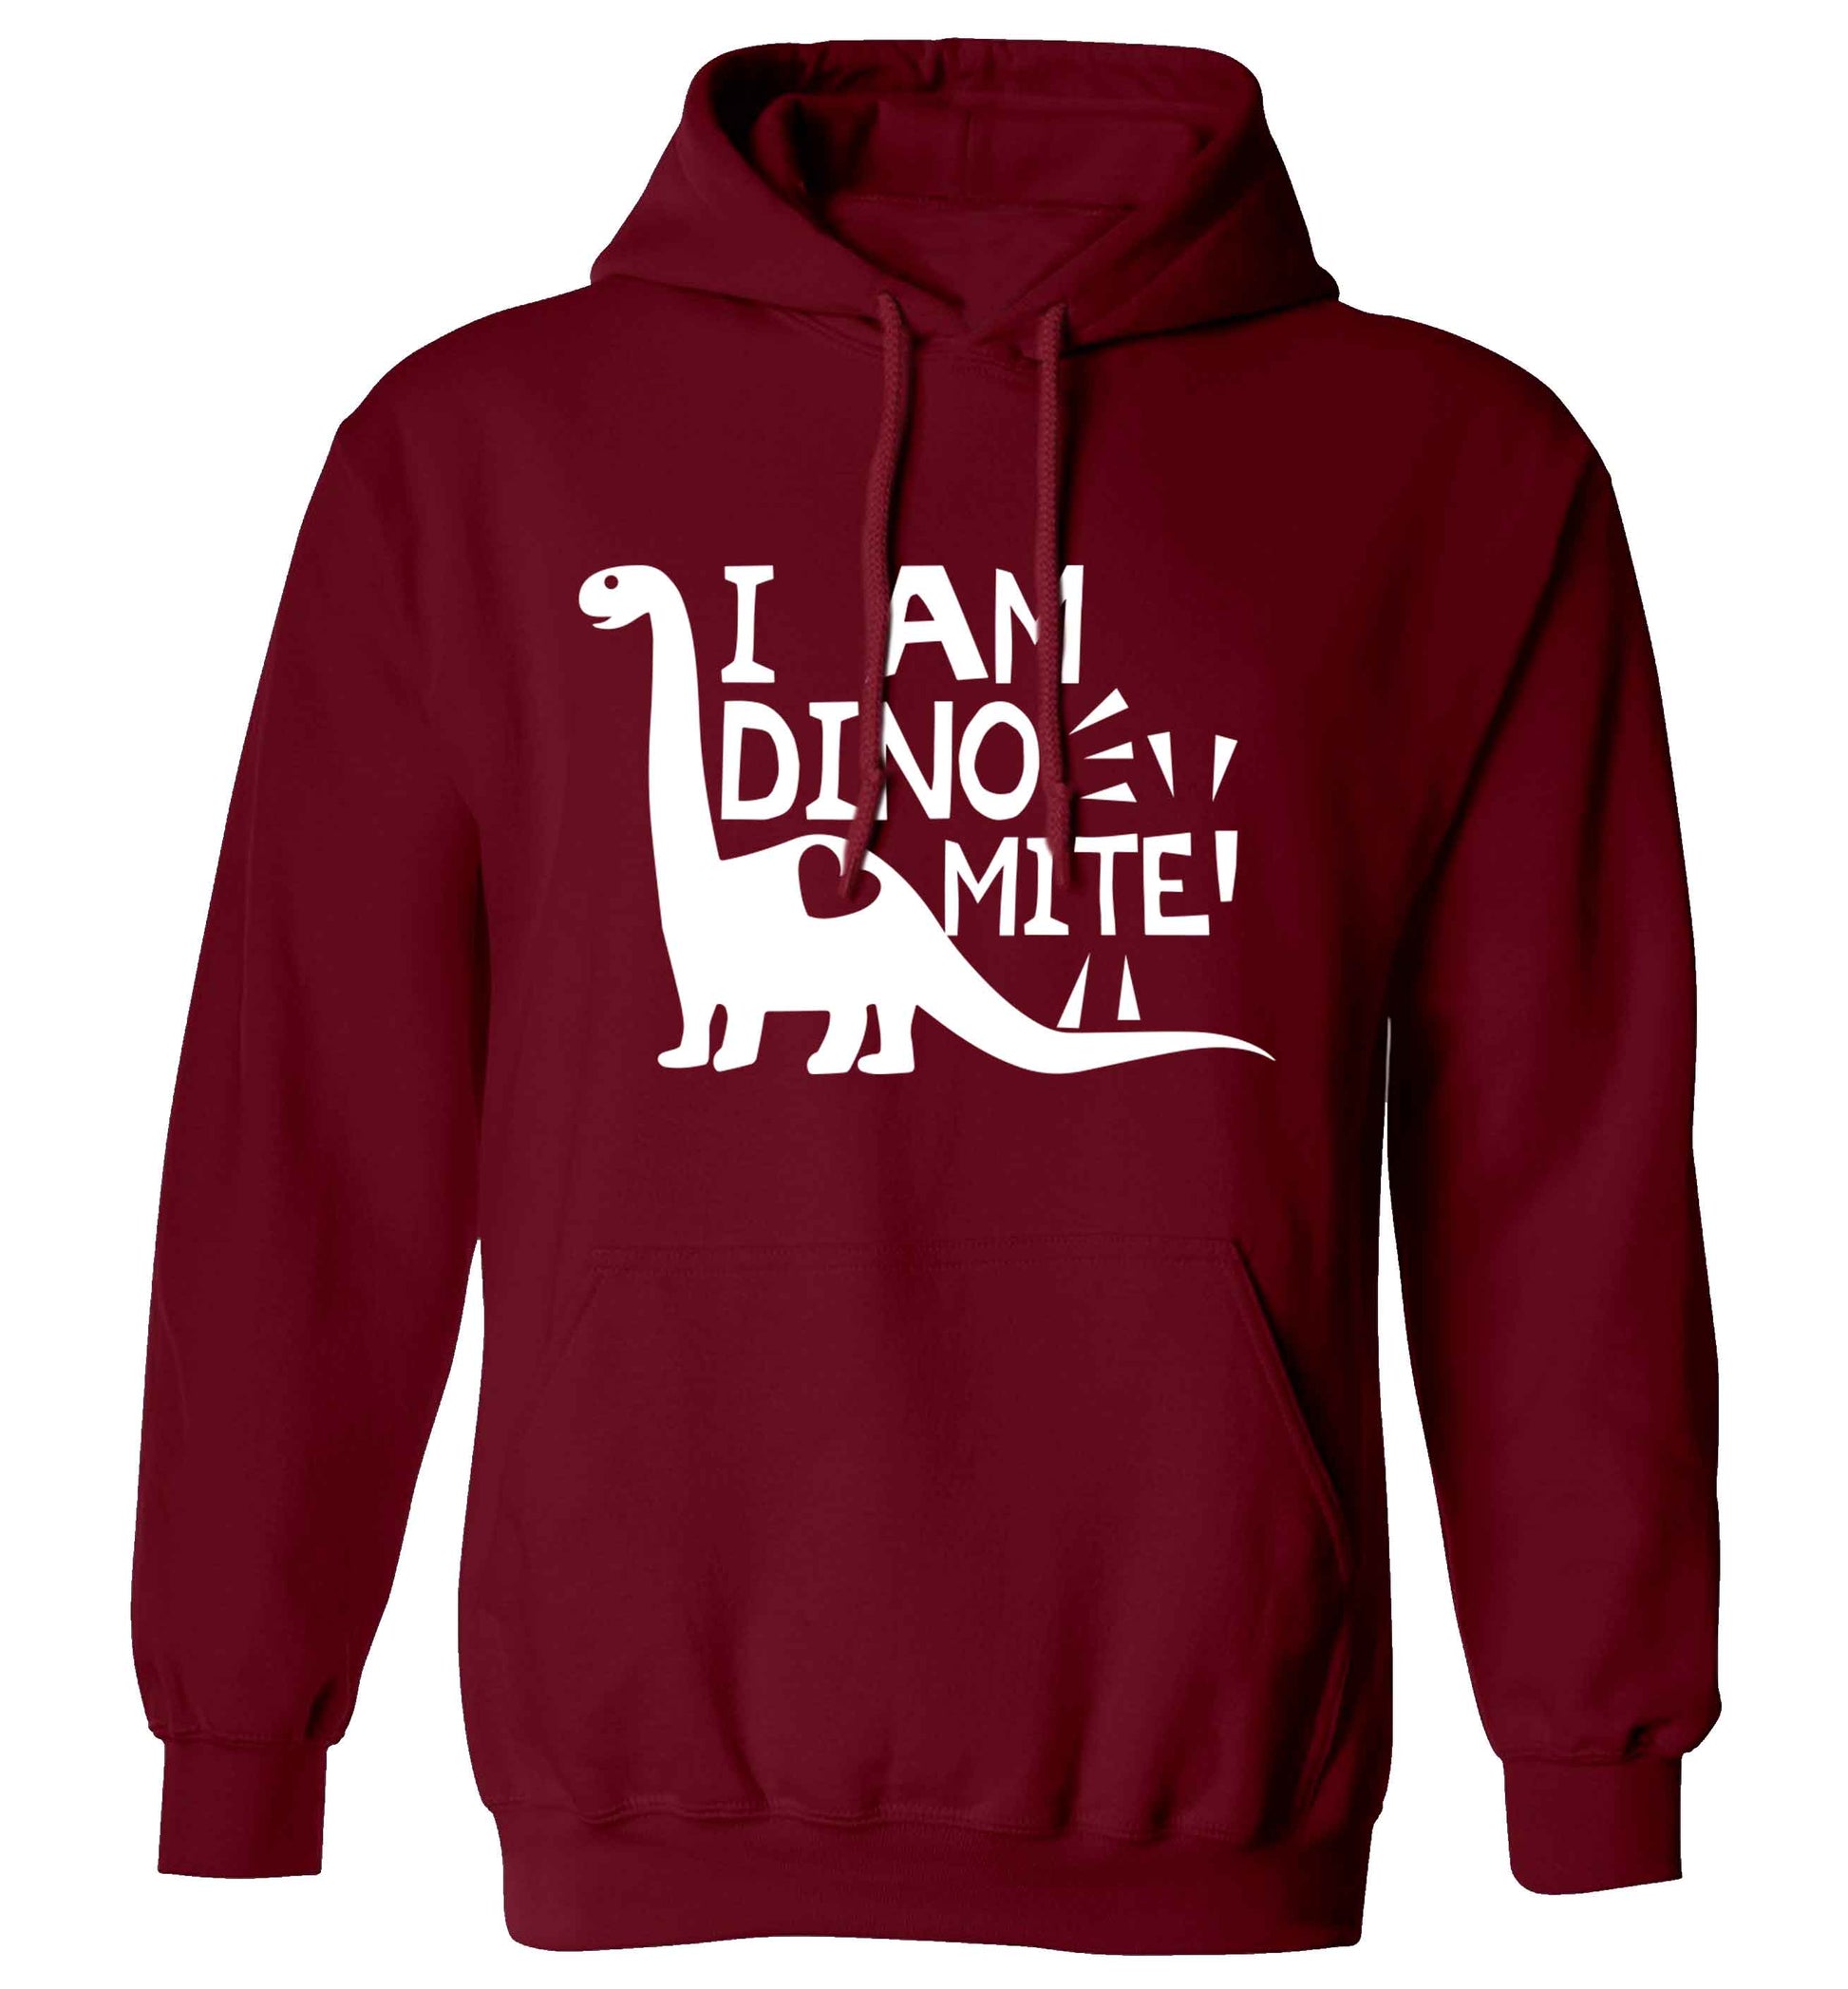 I am dinomite! adults unisex maroon hoodie 2XL